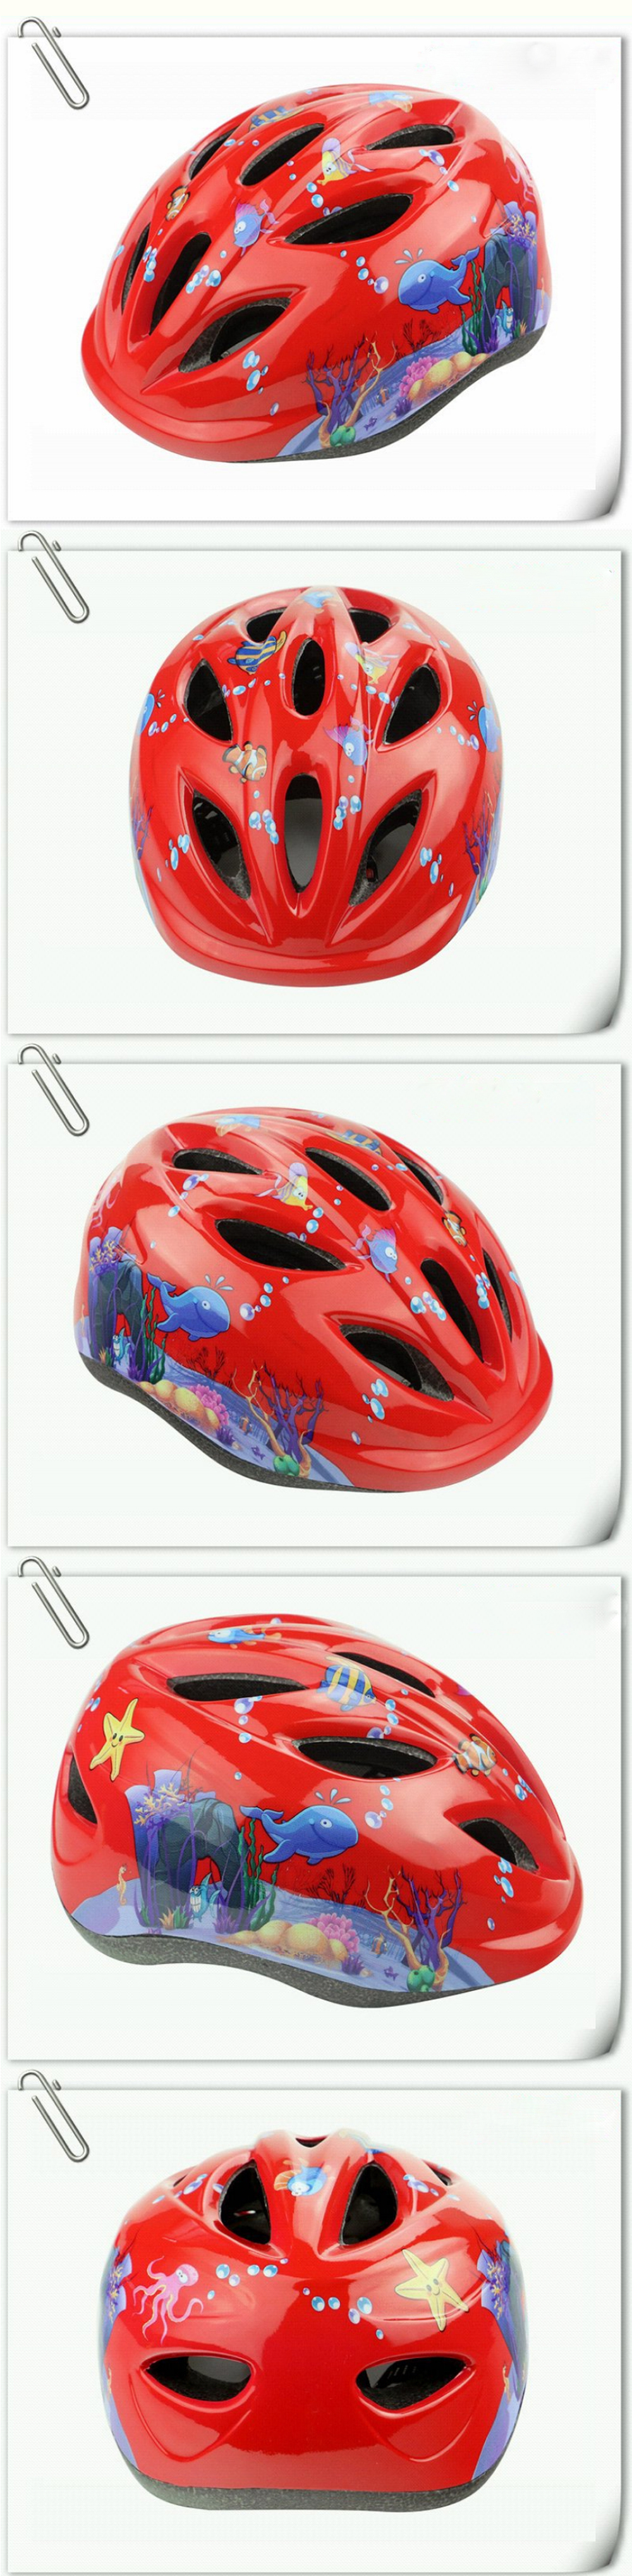 Adjustable-Toddler-Kids-Bicycle-Cycling-Helmet-Skating-Helmet-MTB-Bike-Mountain-Road-Cycling-Safety--1702808-1